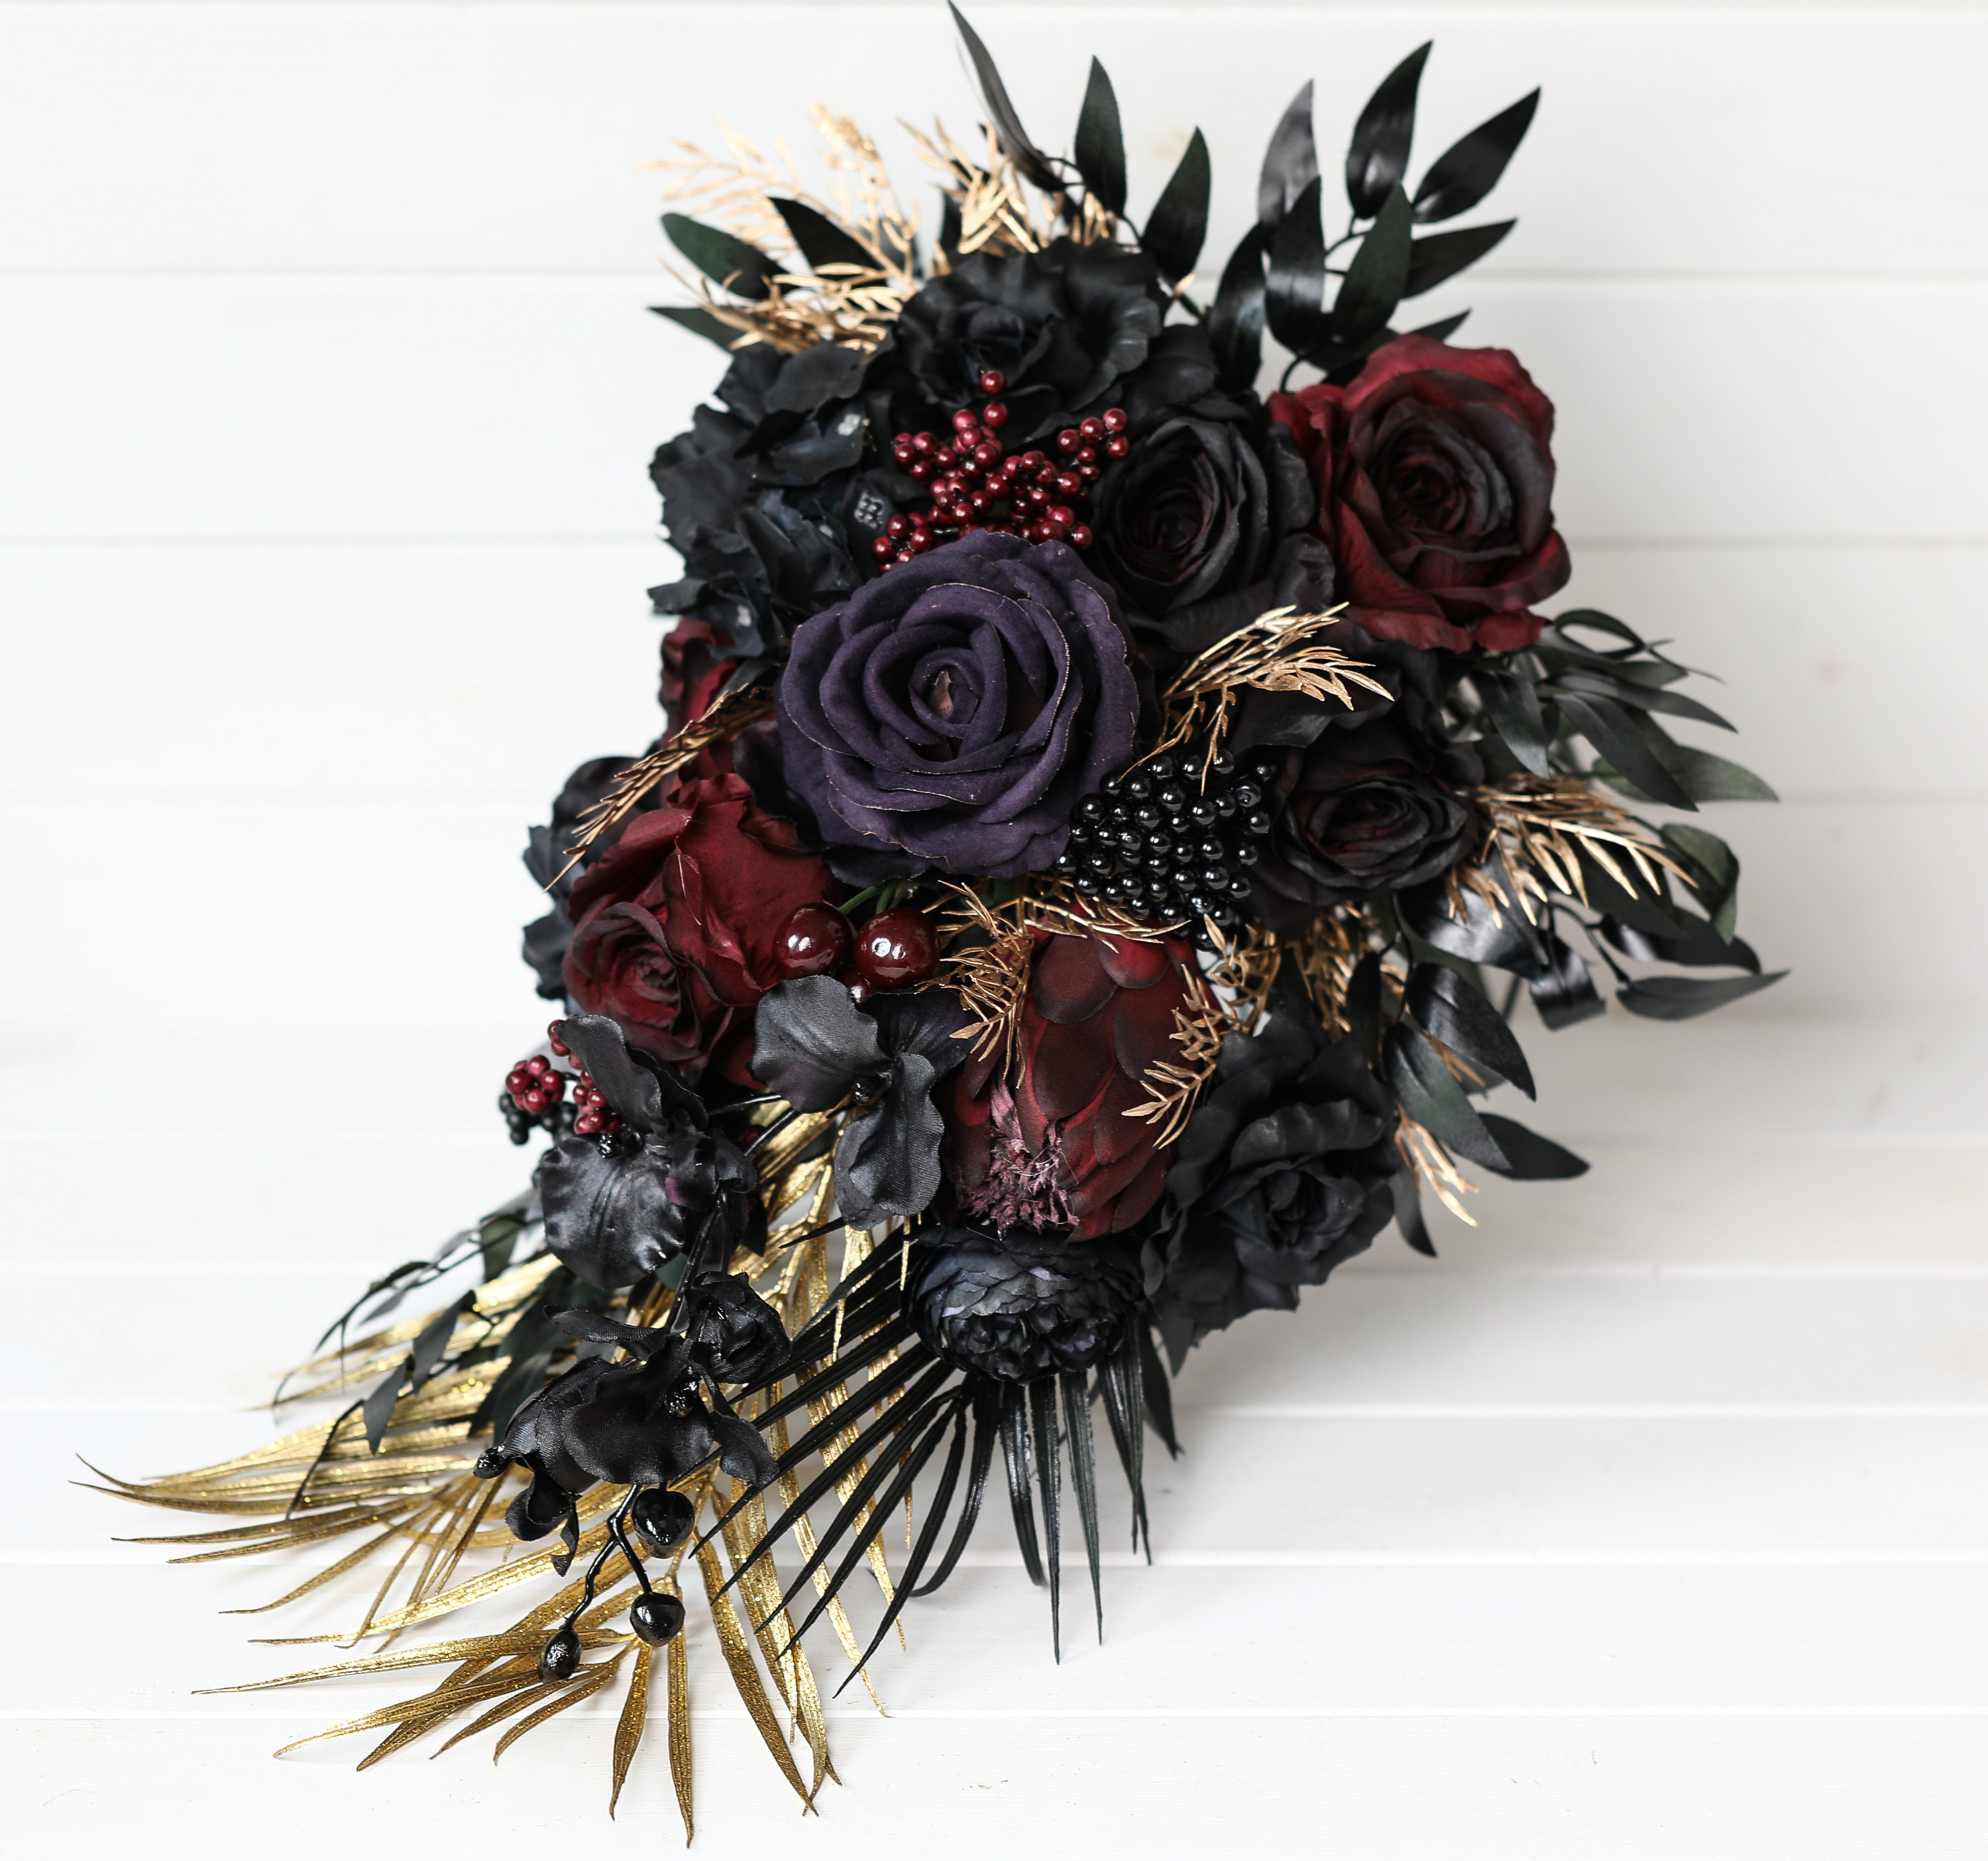 Artificial Flower Black Rose Bouquets for Wedding Decor,bar Flower  Decor,fake Flower Home Decoration,table Decor Flower 